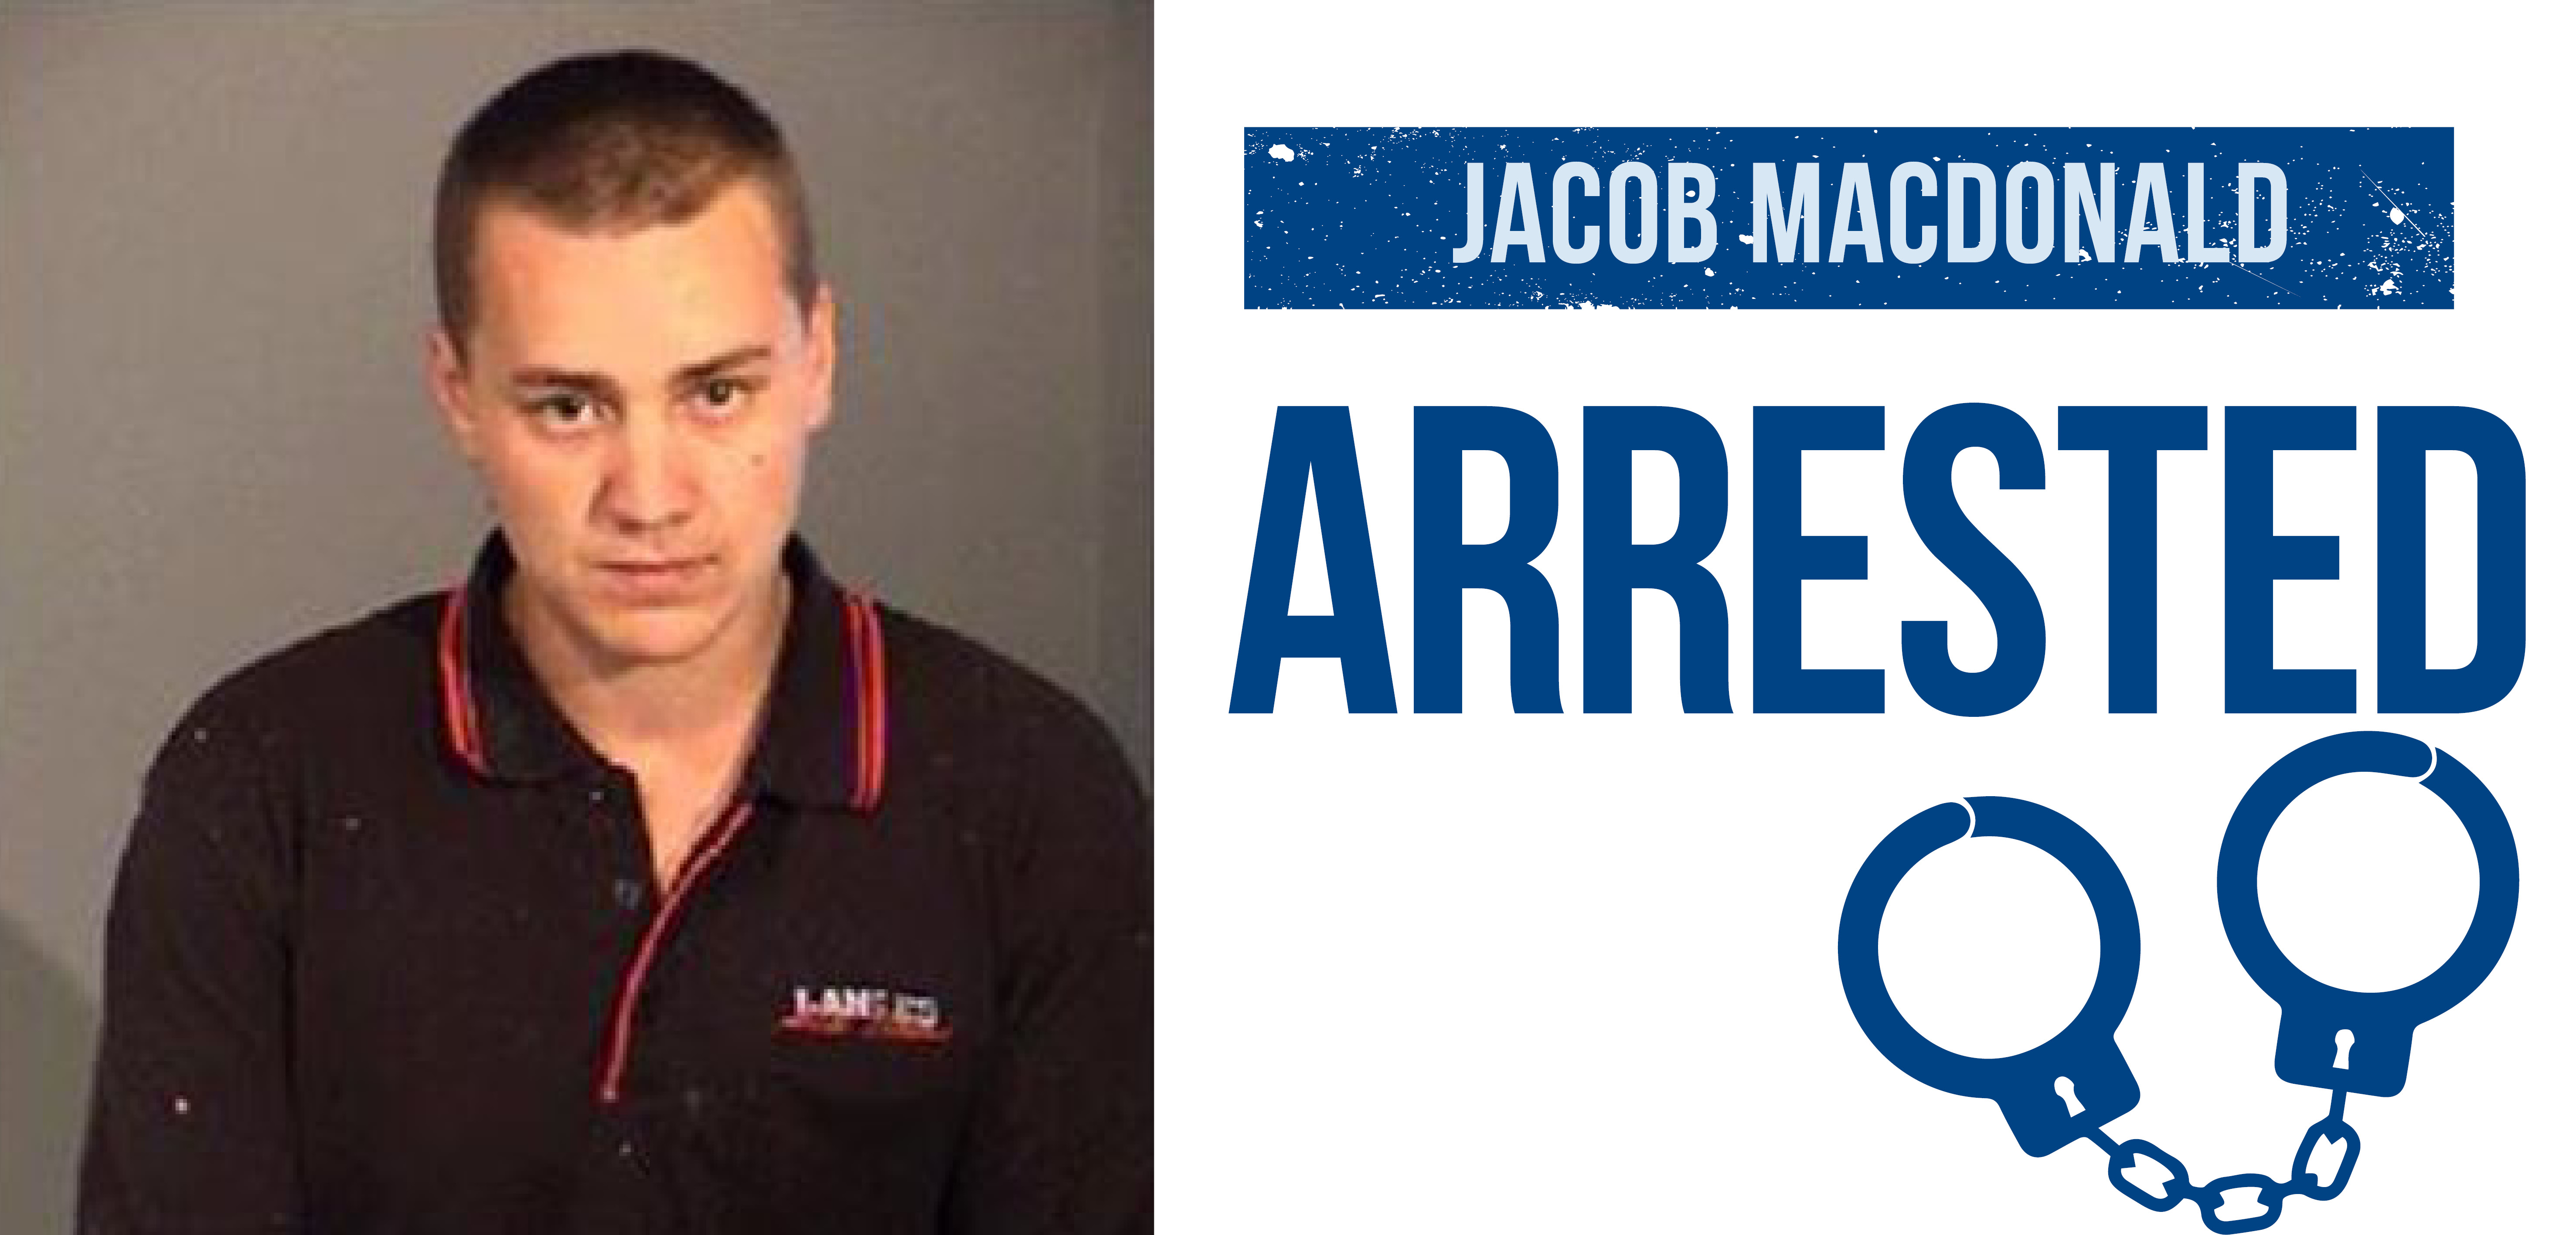 image of escaped detainee Jacob Macdonald